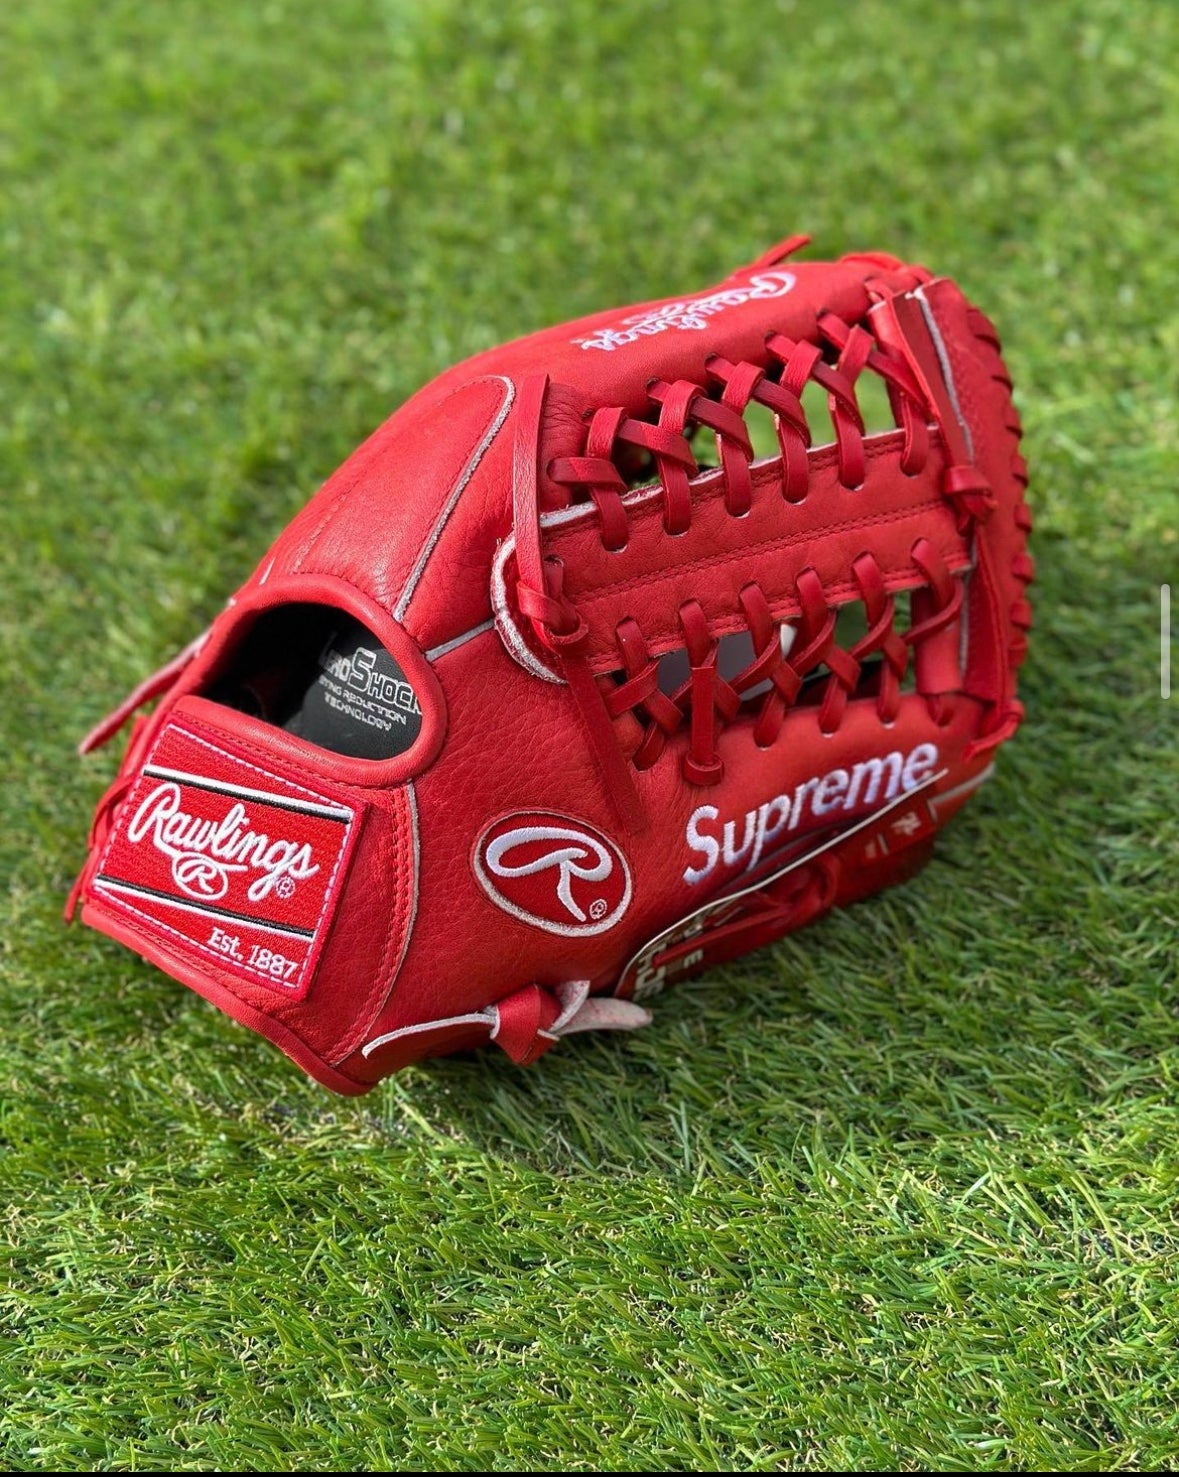 NEW Rawlings x Supreme New York Player Preferred Baseball Glove